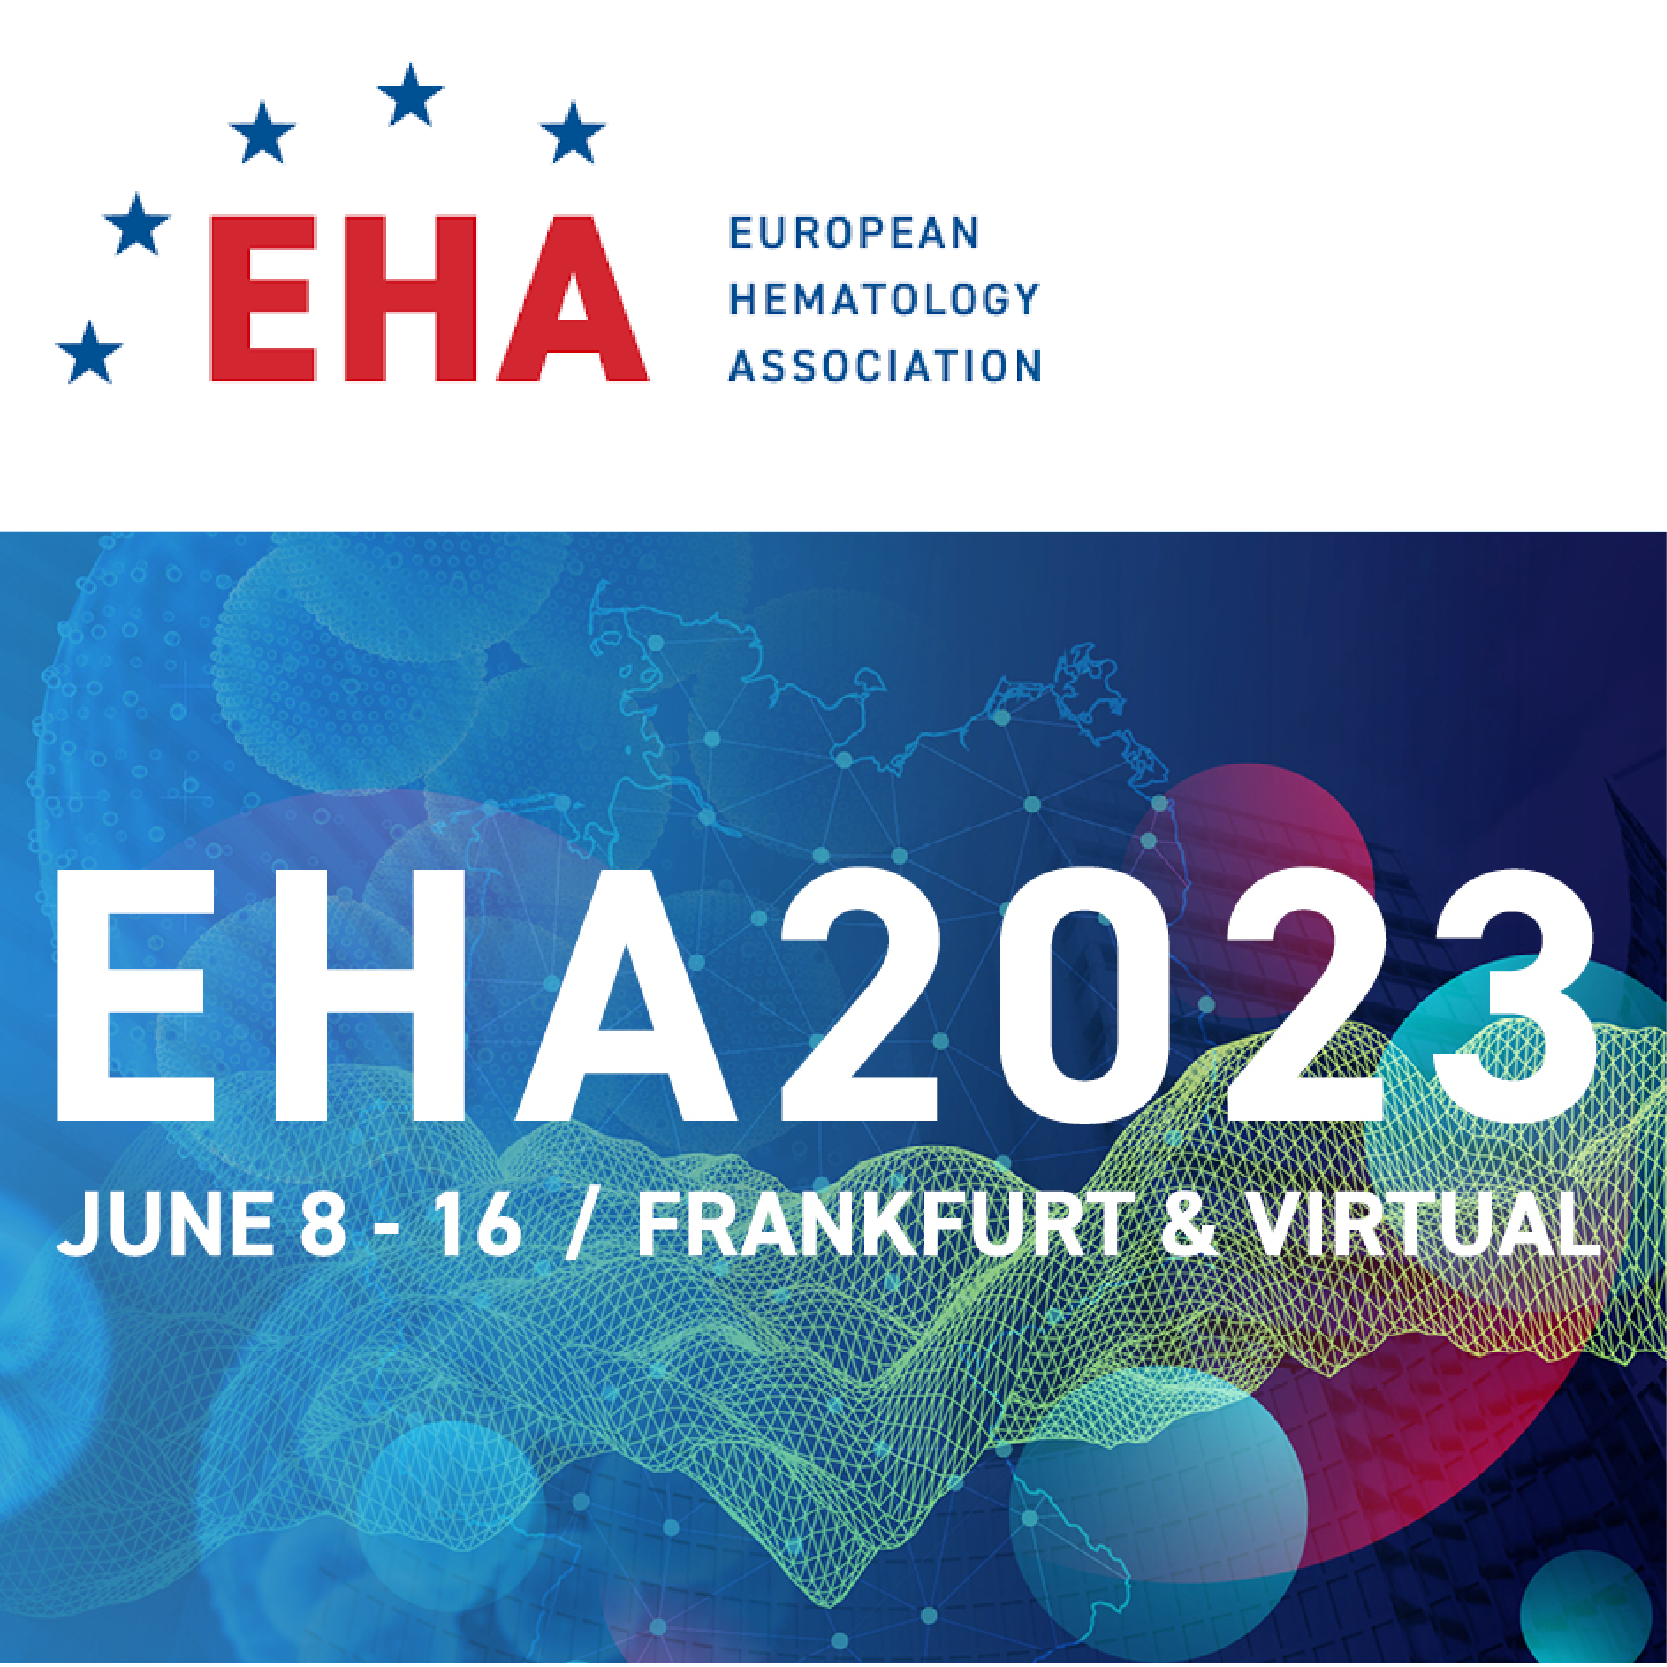 The European Hematology Association - EHA 2023